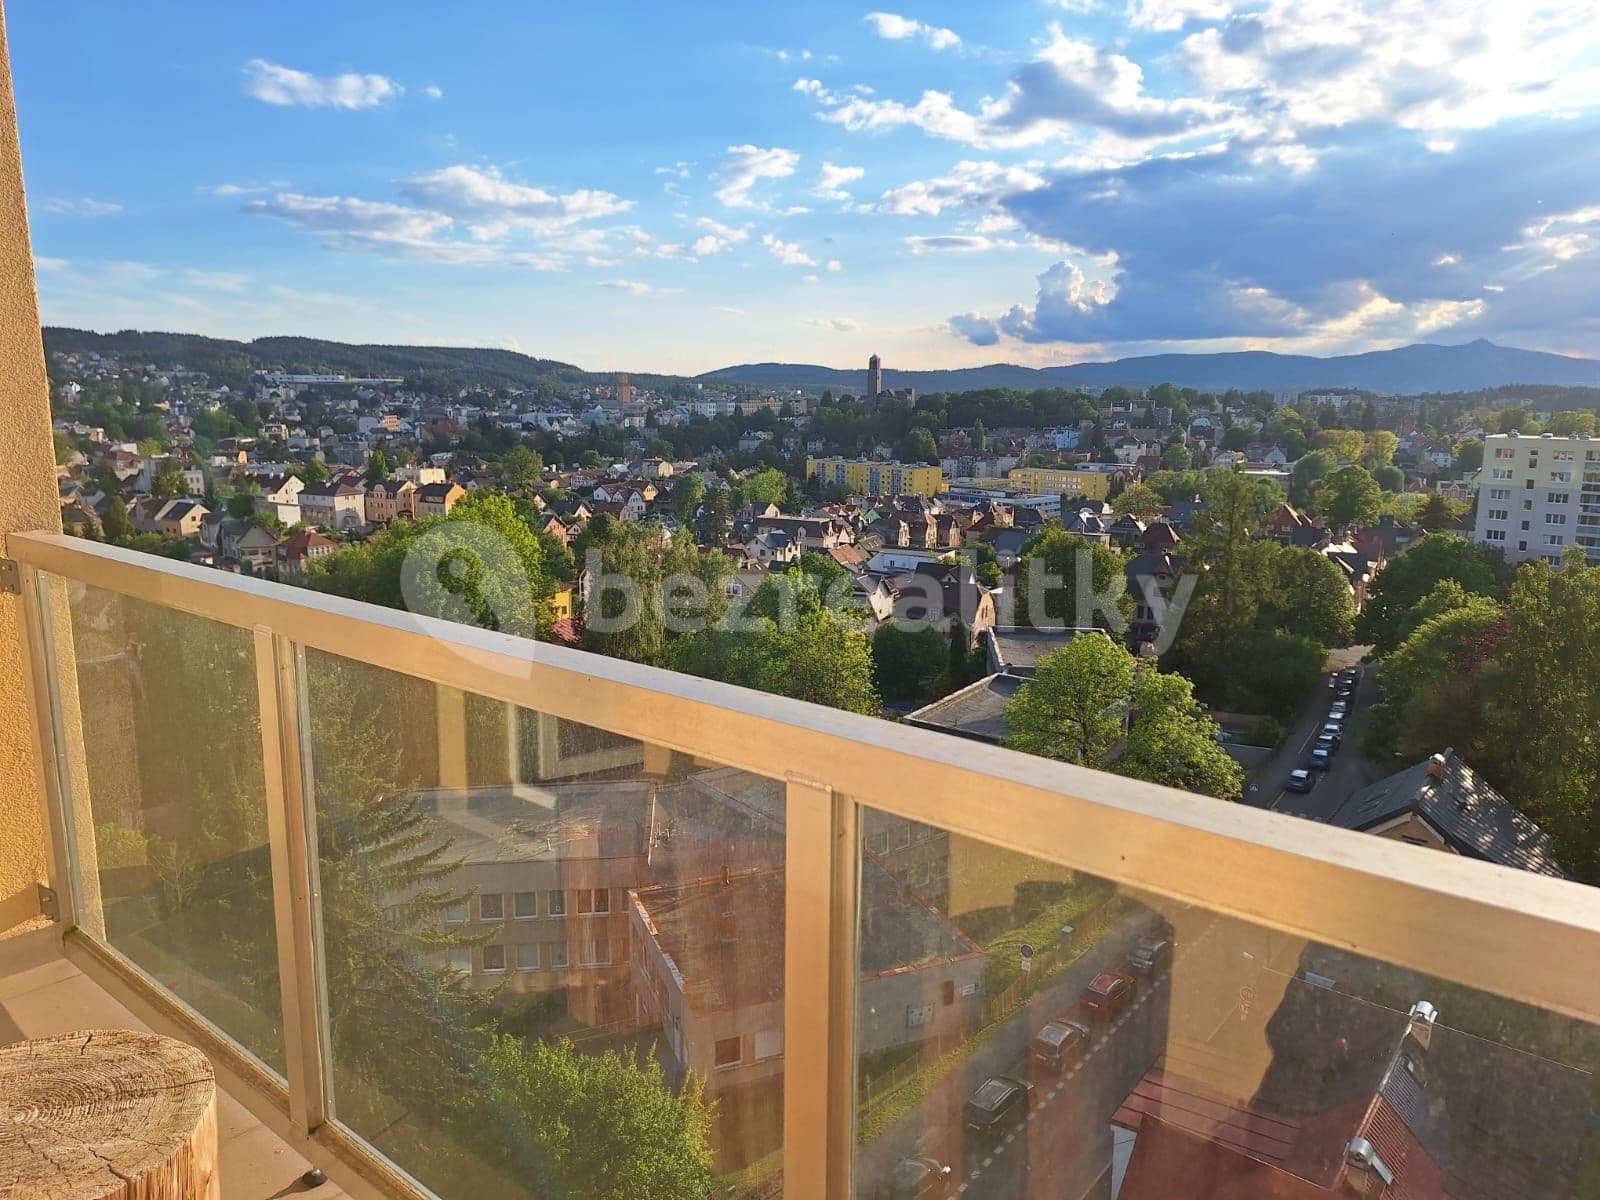 Predaj bytu 3-izbový 80 m², Švédská, Jablonec nad Nisou, Liberecký kraj